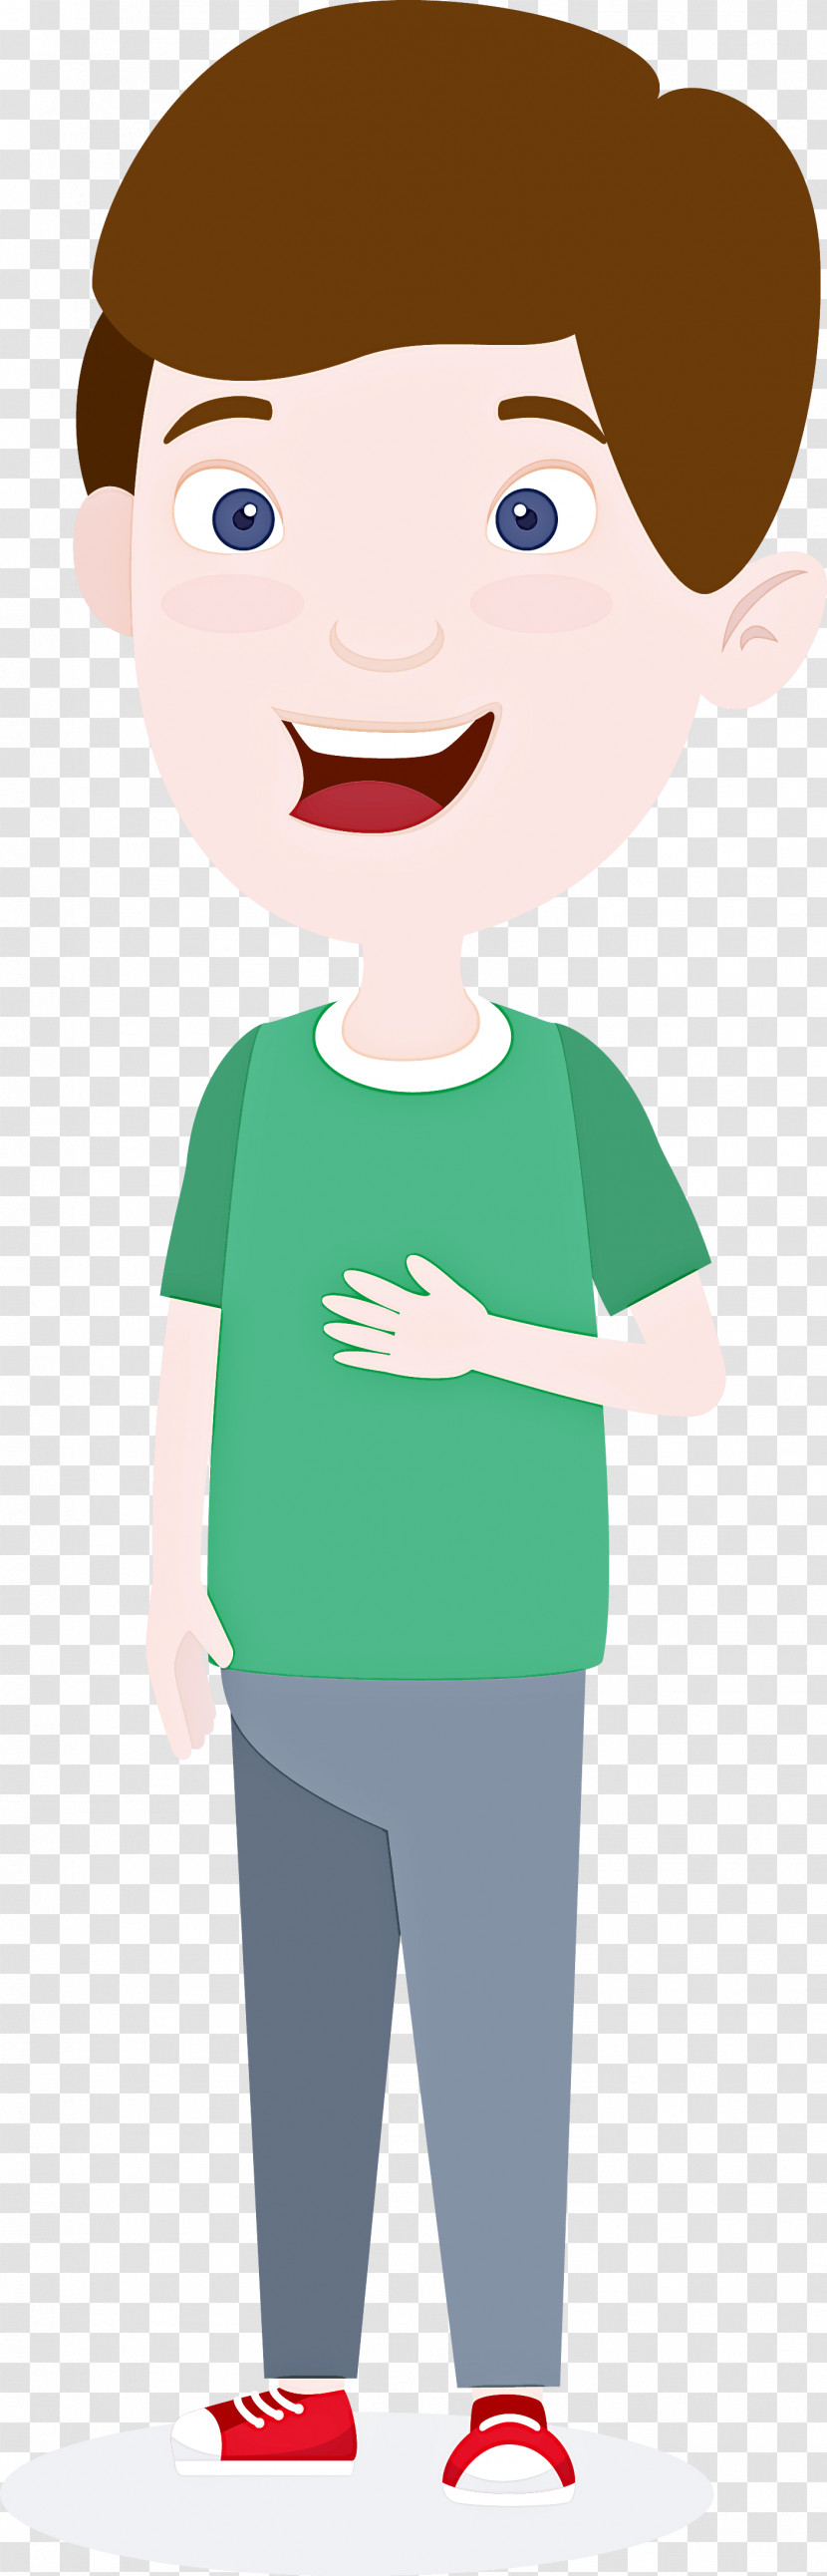 Green Cartoon T-shirt Sleeve Smile Transparent PNG